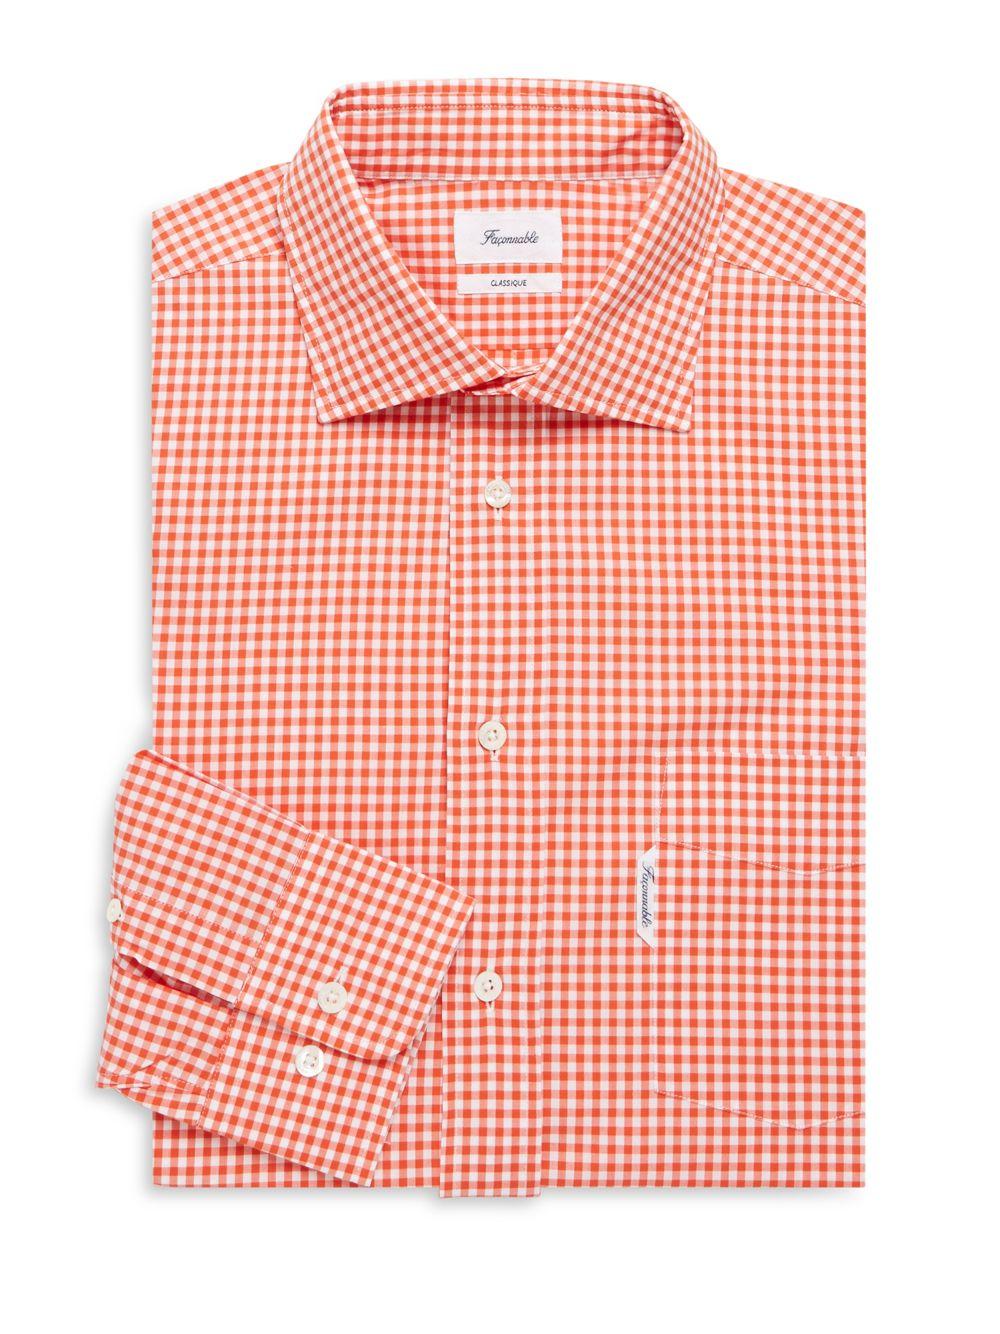 Façonnable Plaid Cotton Casual Button-down Shirt in Orange for Men - Lyst